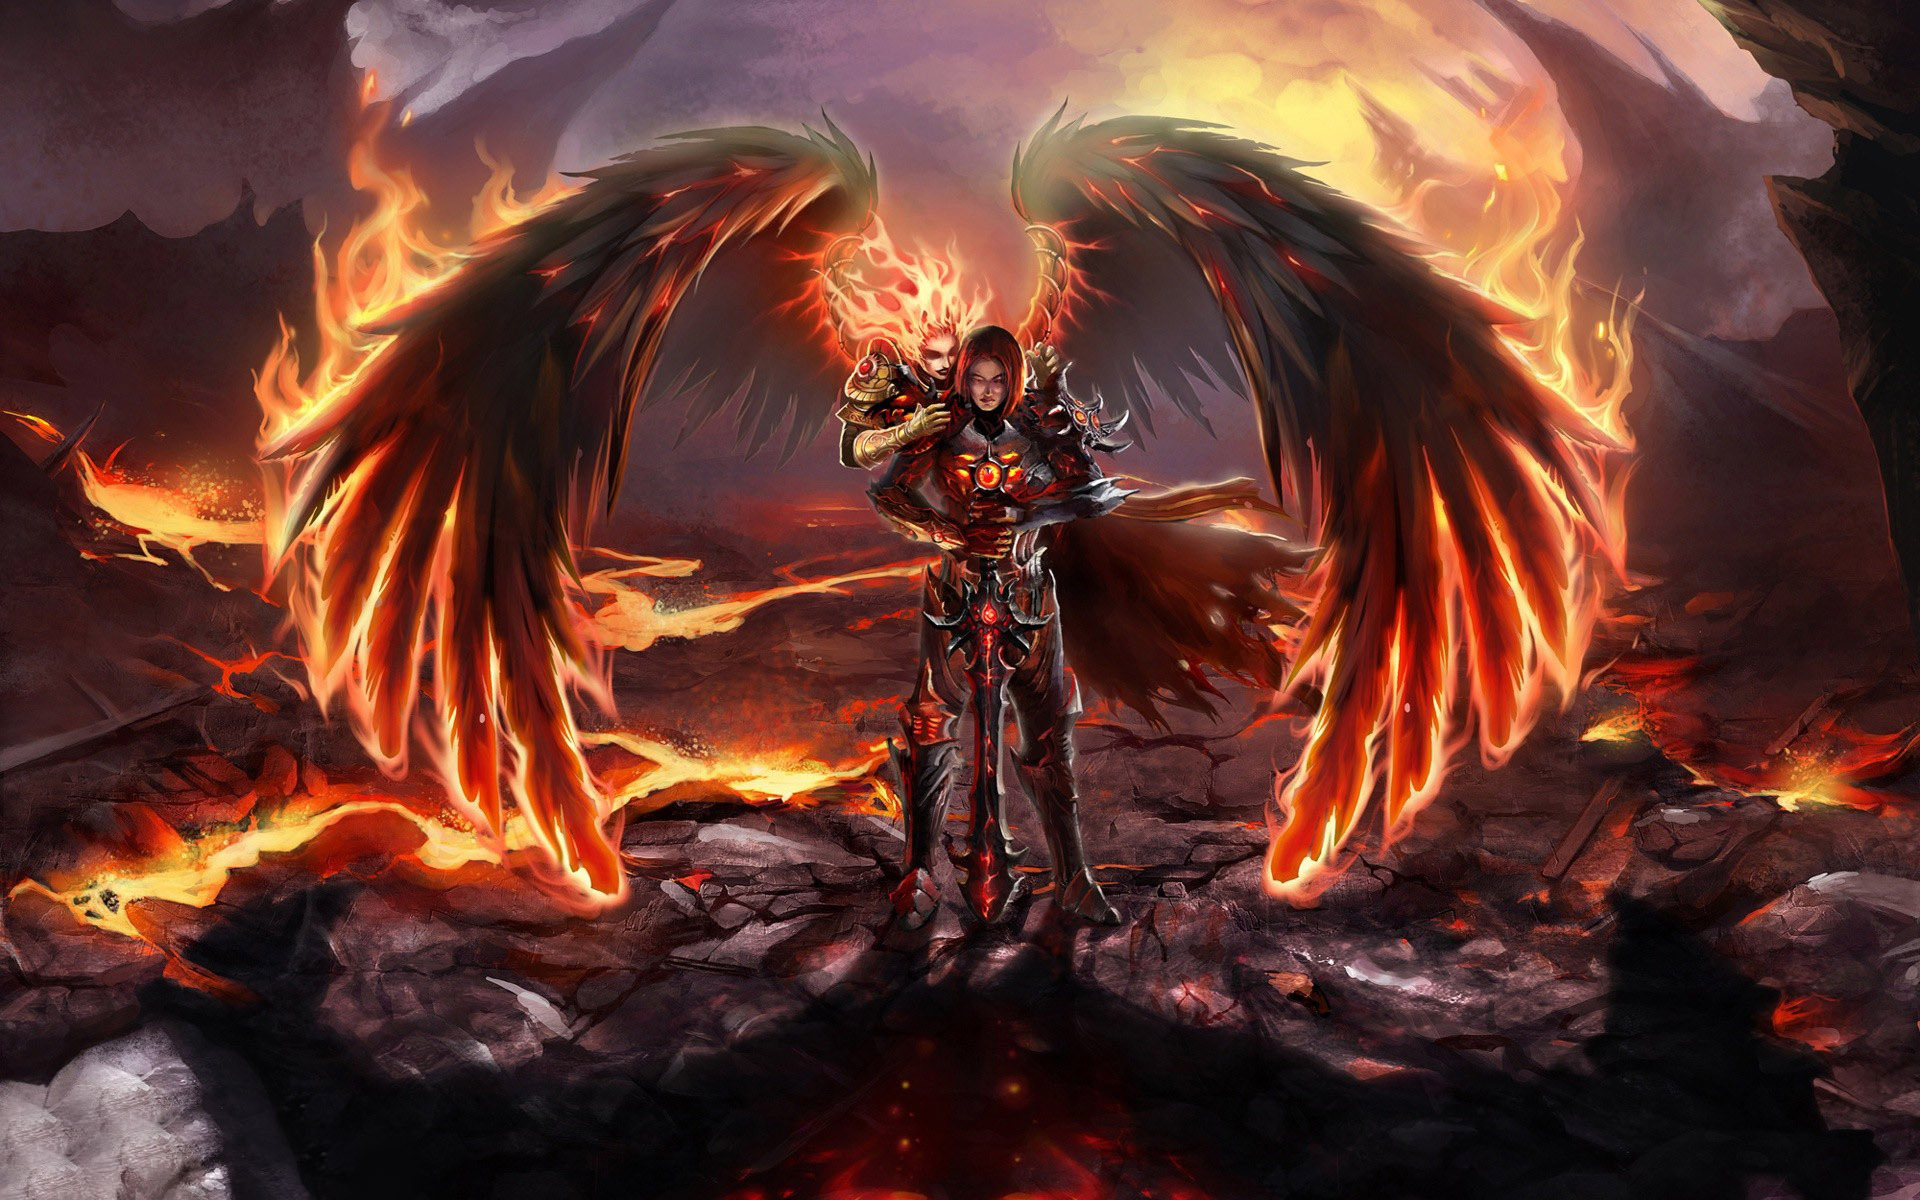  angel fire warrior flame archangel resolution 1920x1200 date 13 10 22